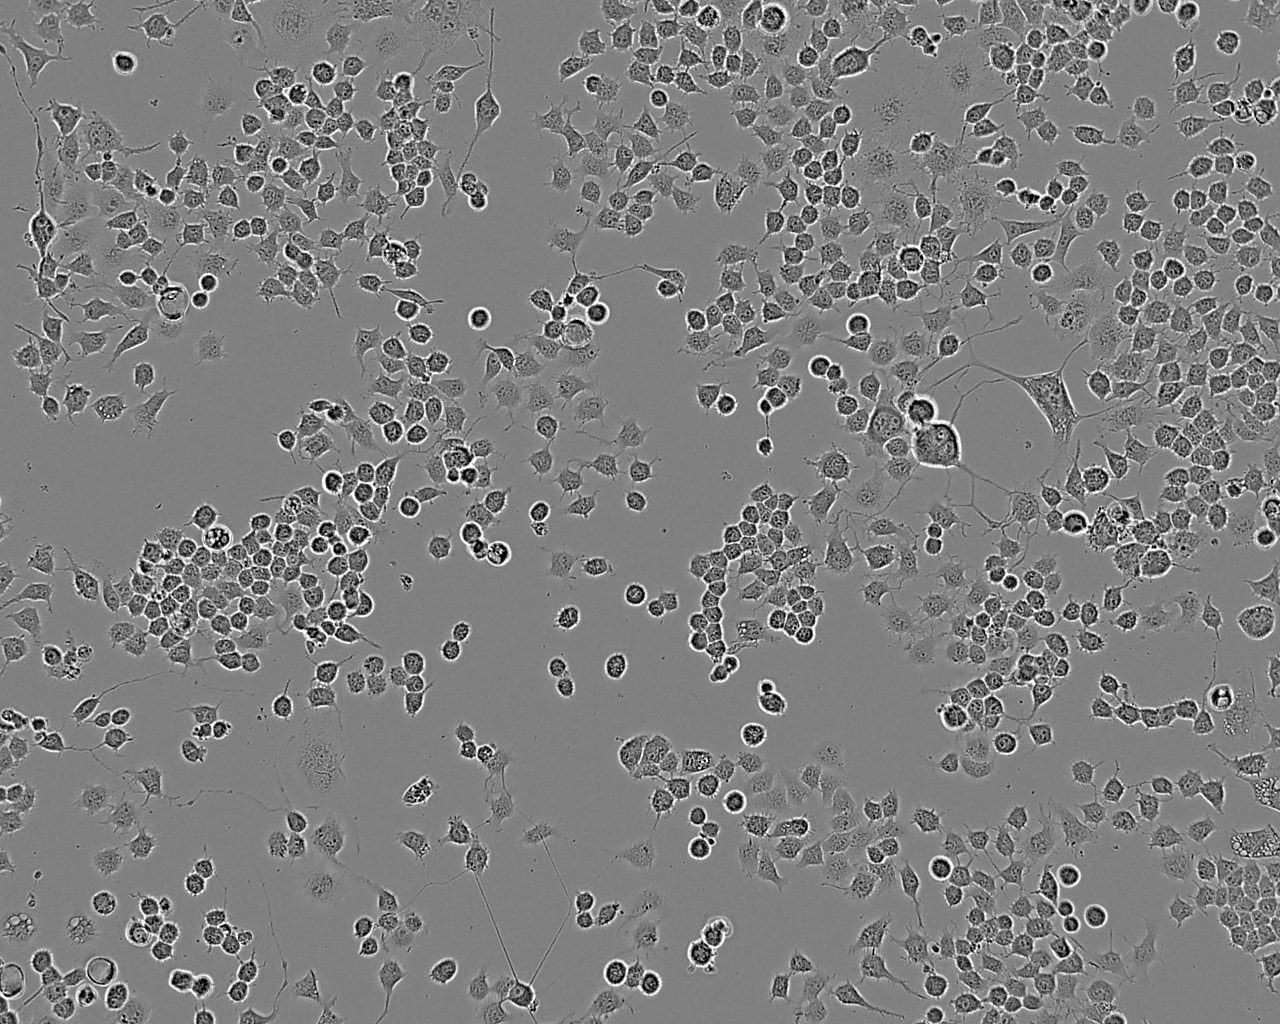 M059J Cells|人脑神经胶质瘤细胞系